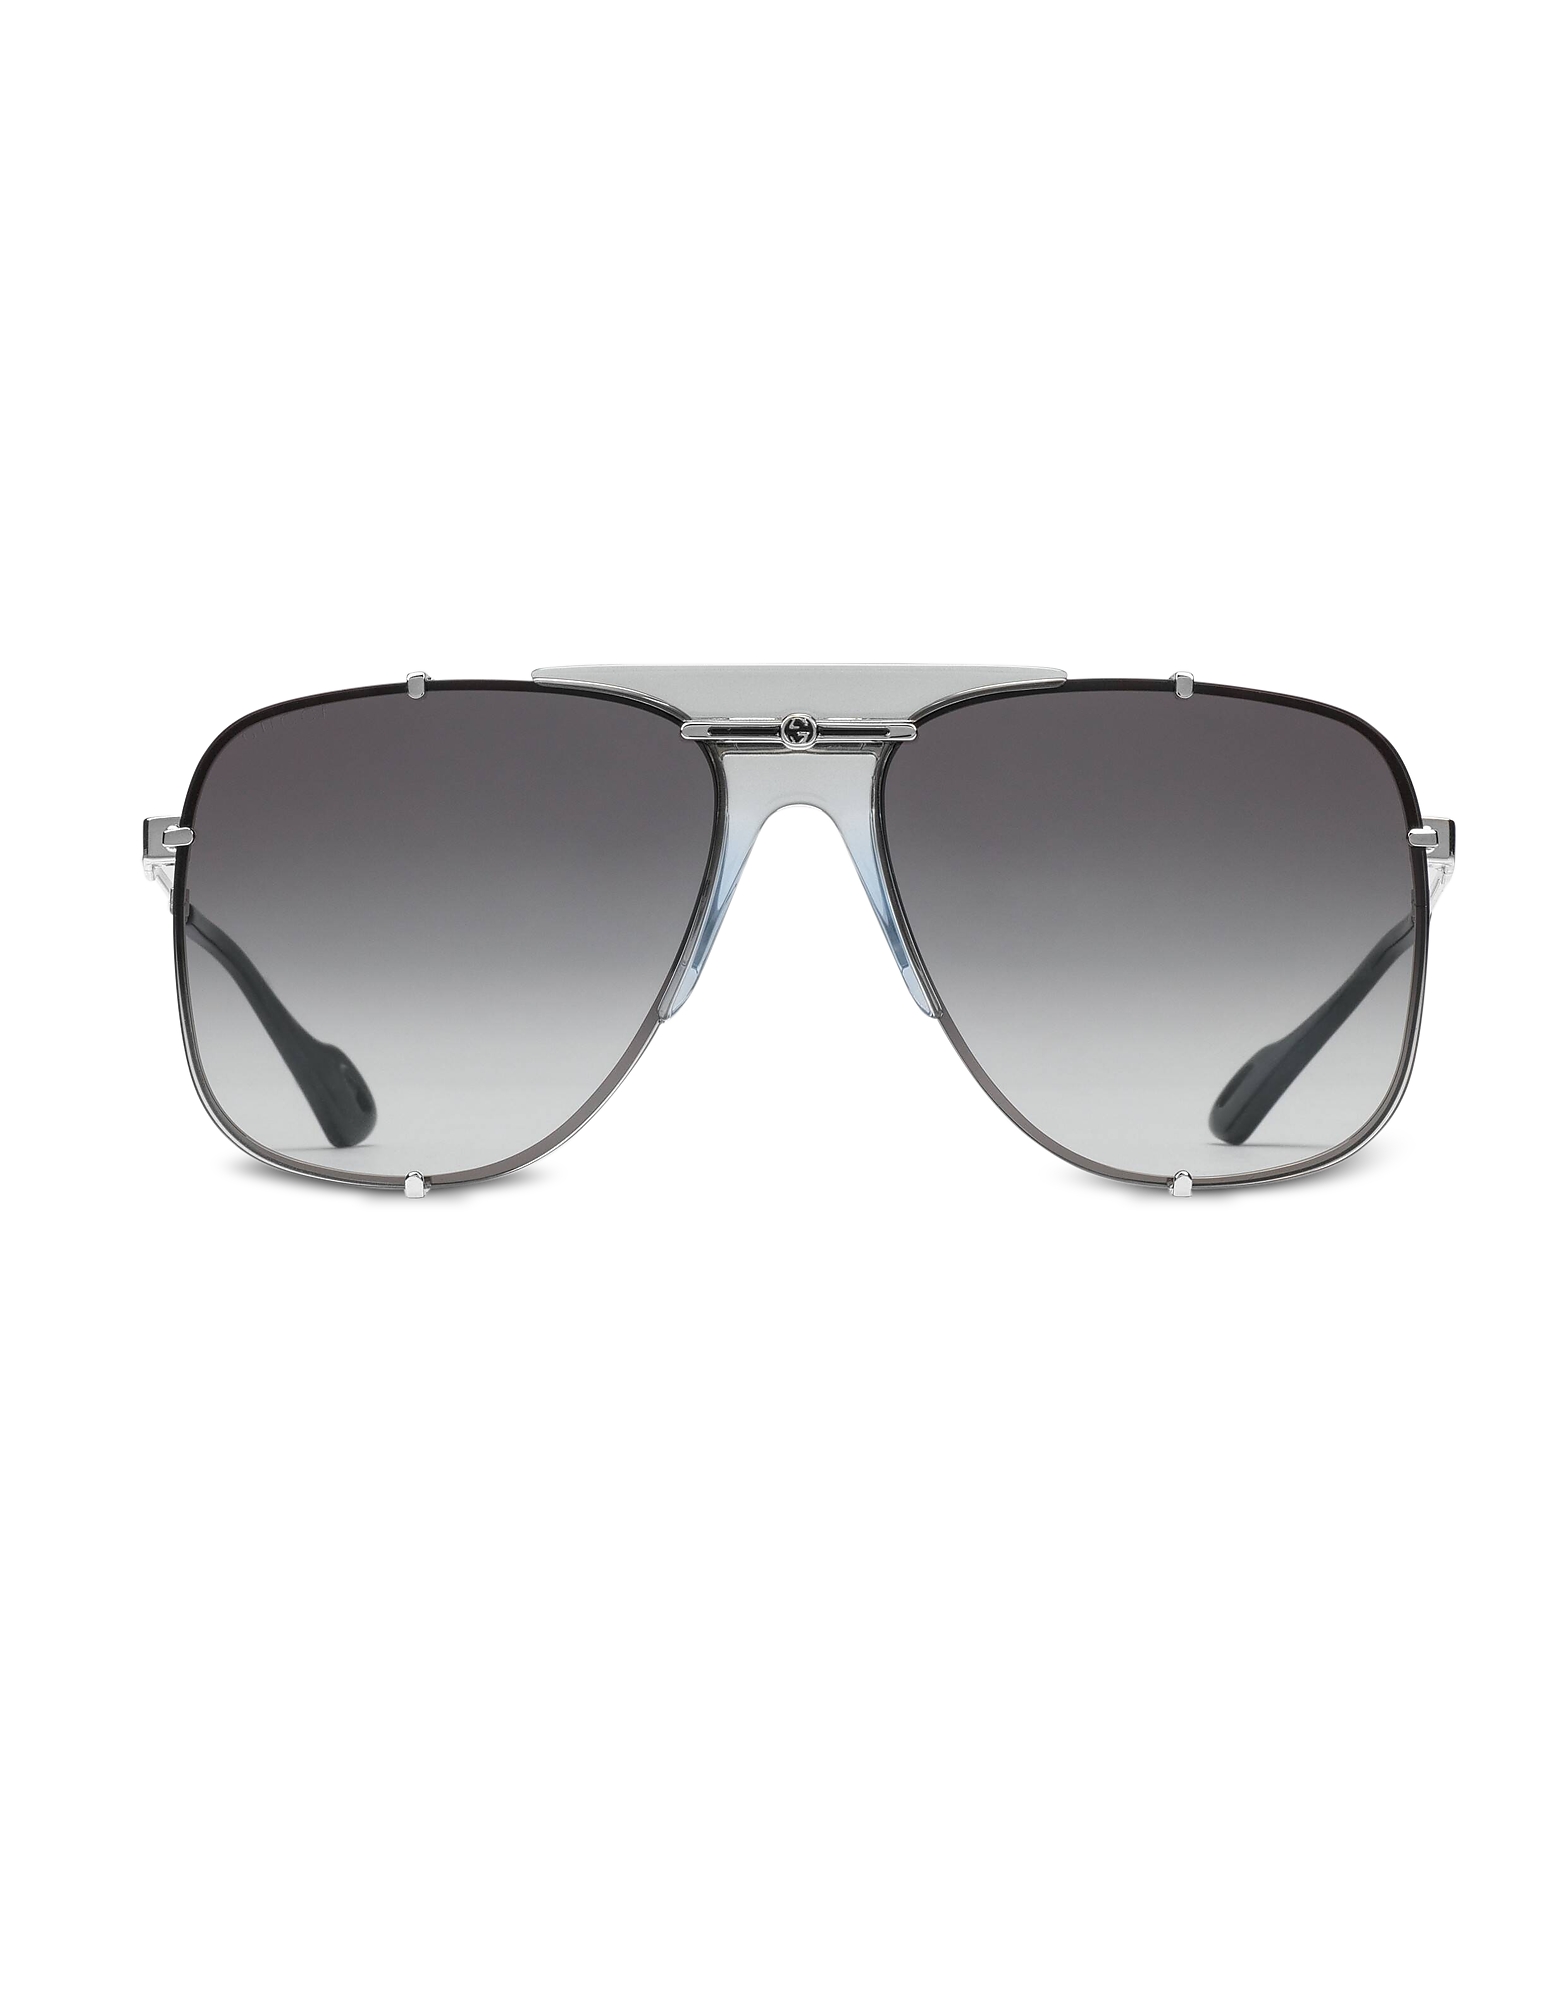 Gucci Sunglasses Metal Frame Aviator Men's Sunglasses